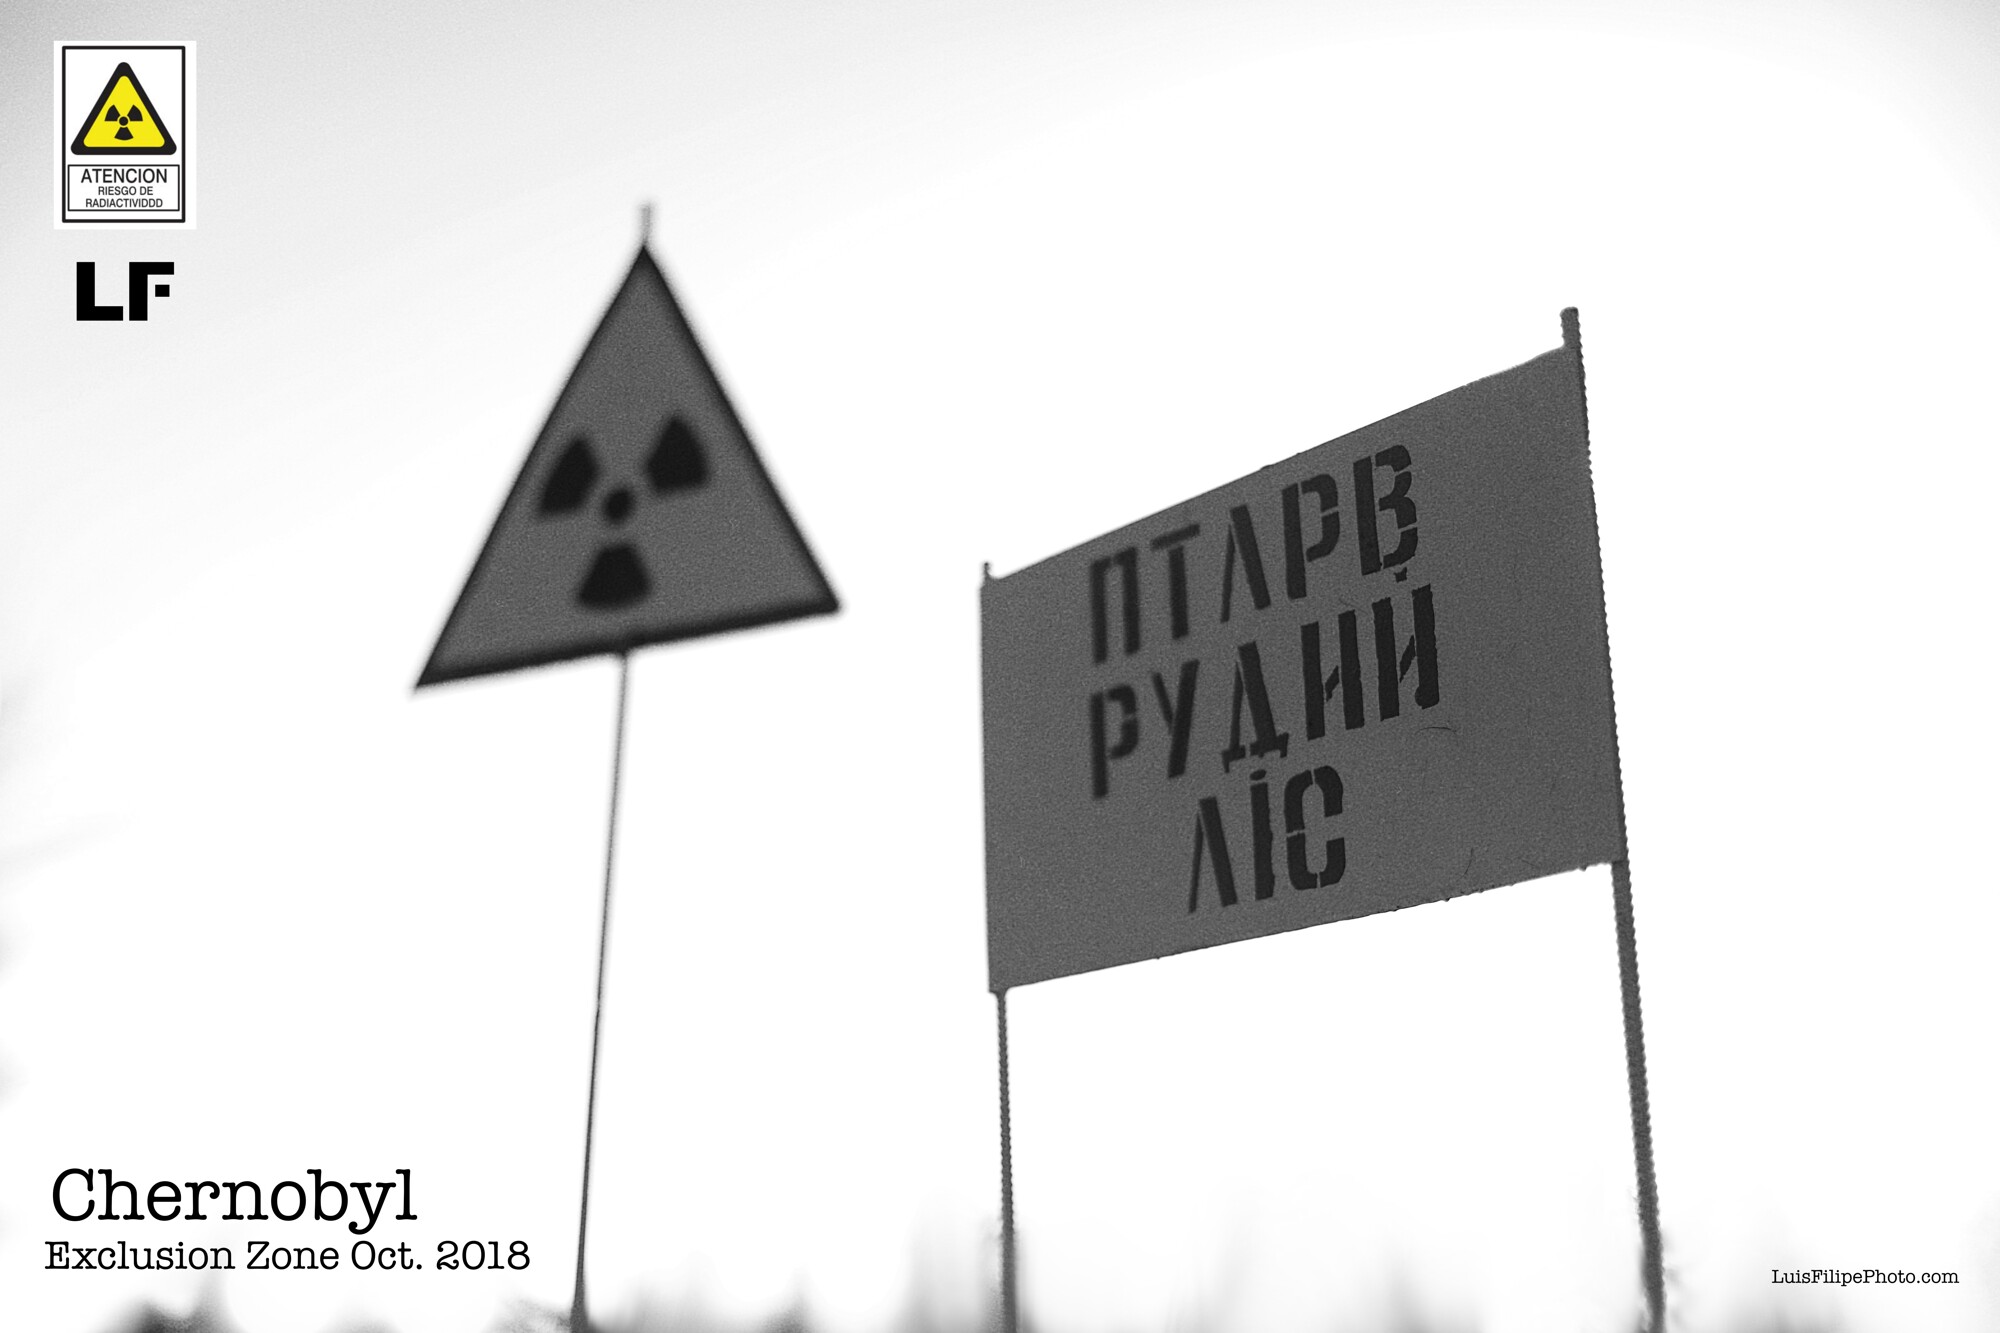 Luis Filipe Photographer - chernobyl-exclusion-zone-luis-filipe-photographer-travel-danger.jpg